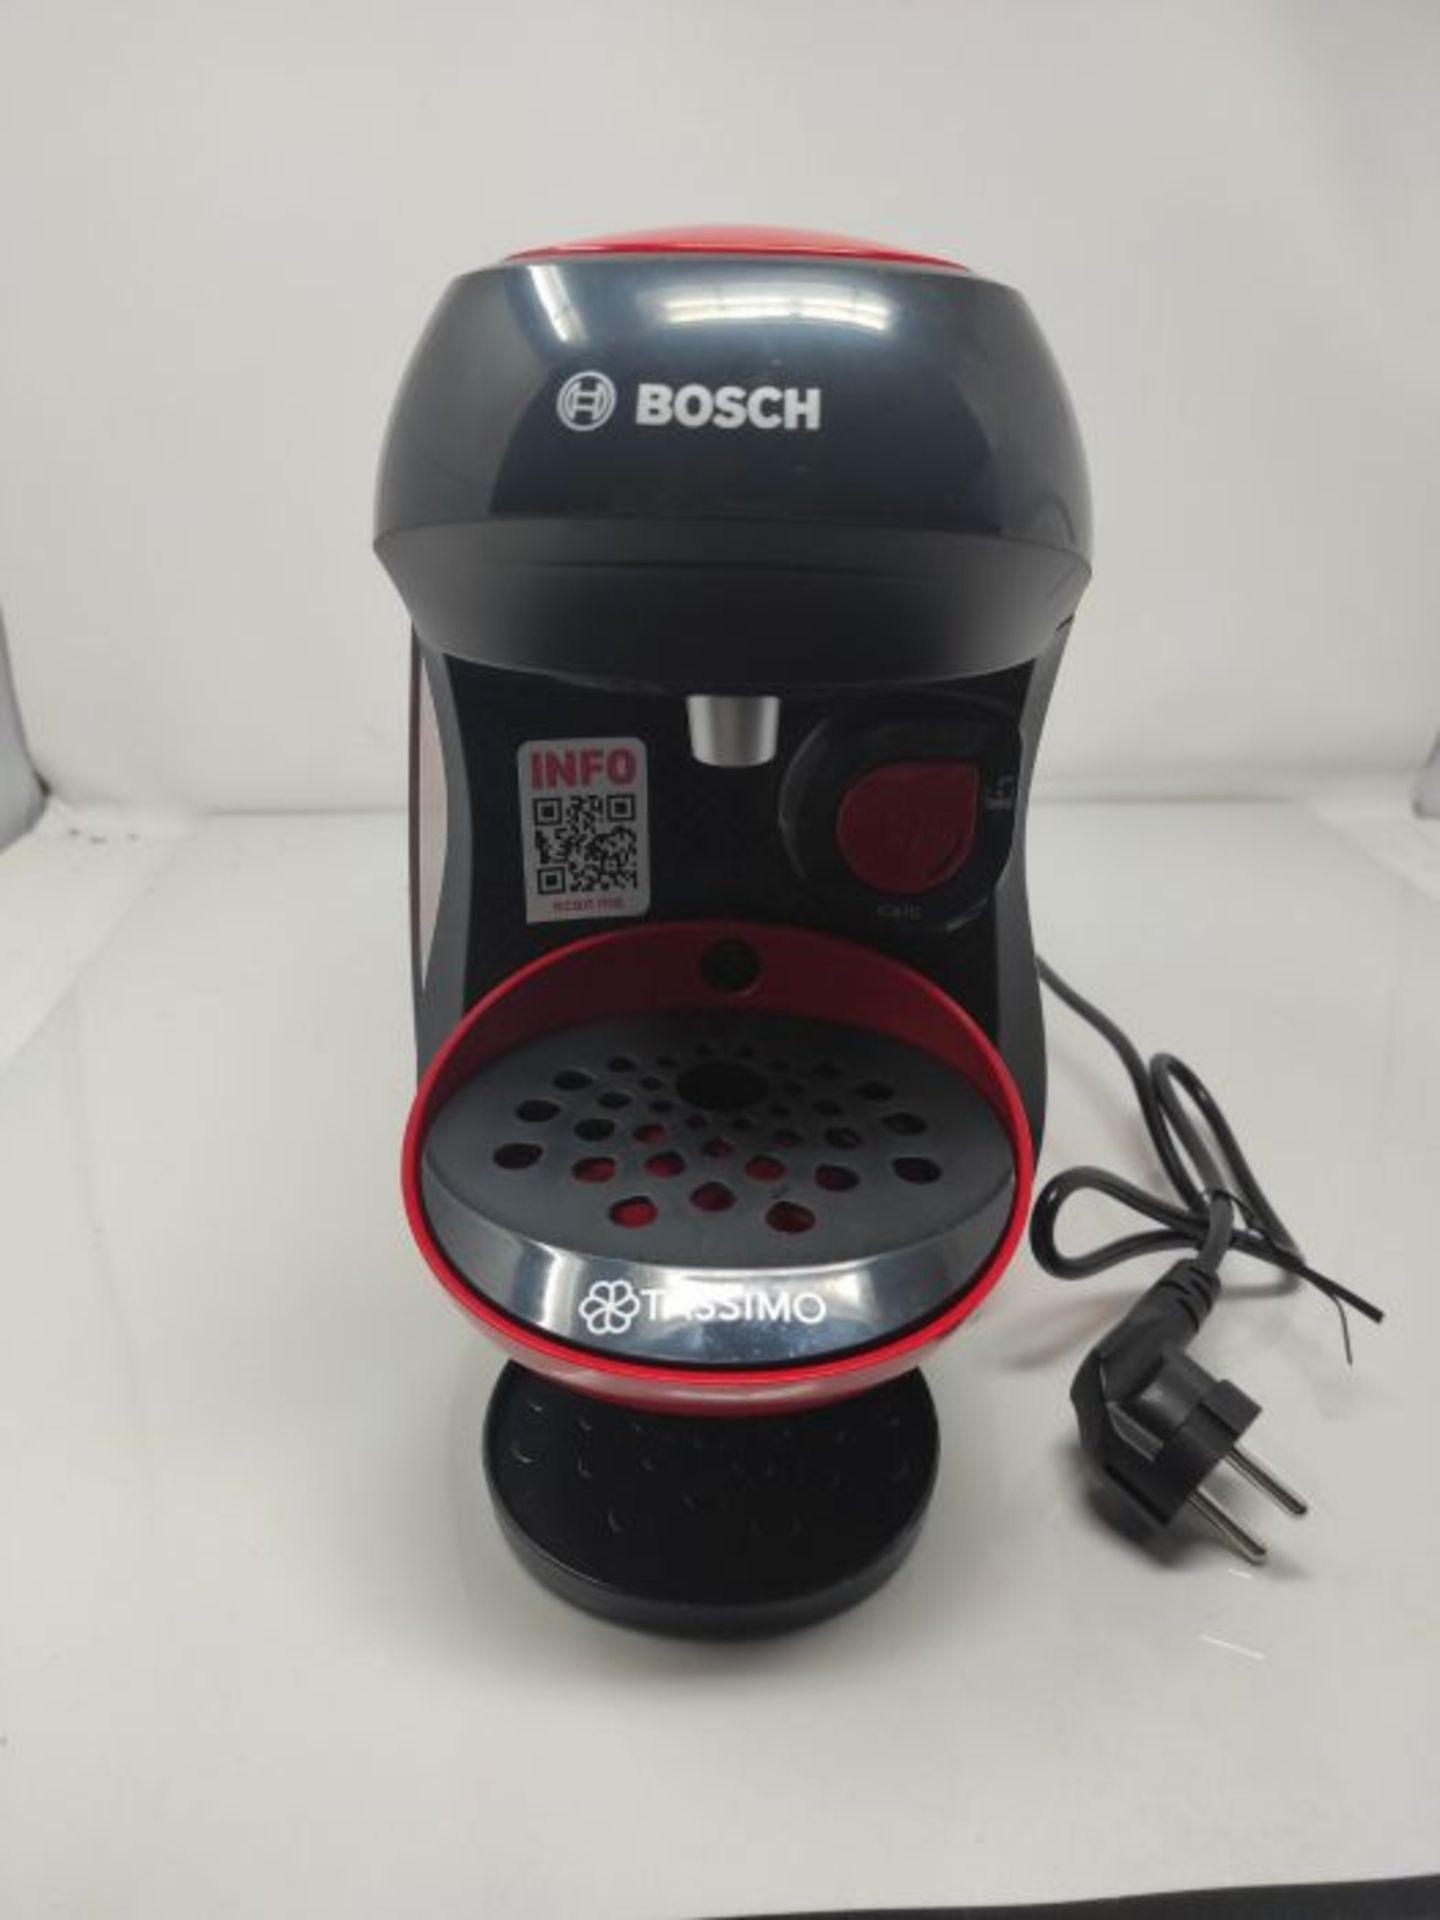 Bosch TAS1003 Freestanding Fully-auto Pod coffee machine 0.7L Black, Red coffee maker - Image 3 of 3